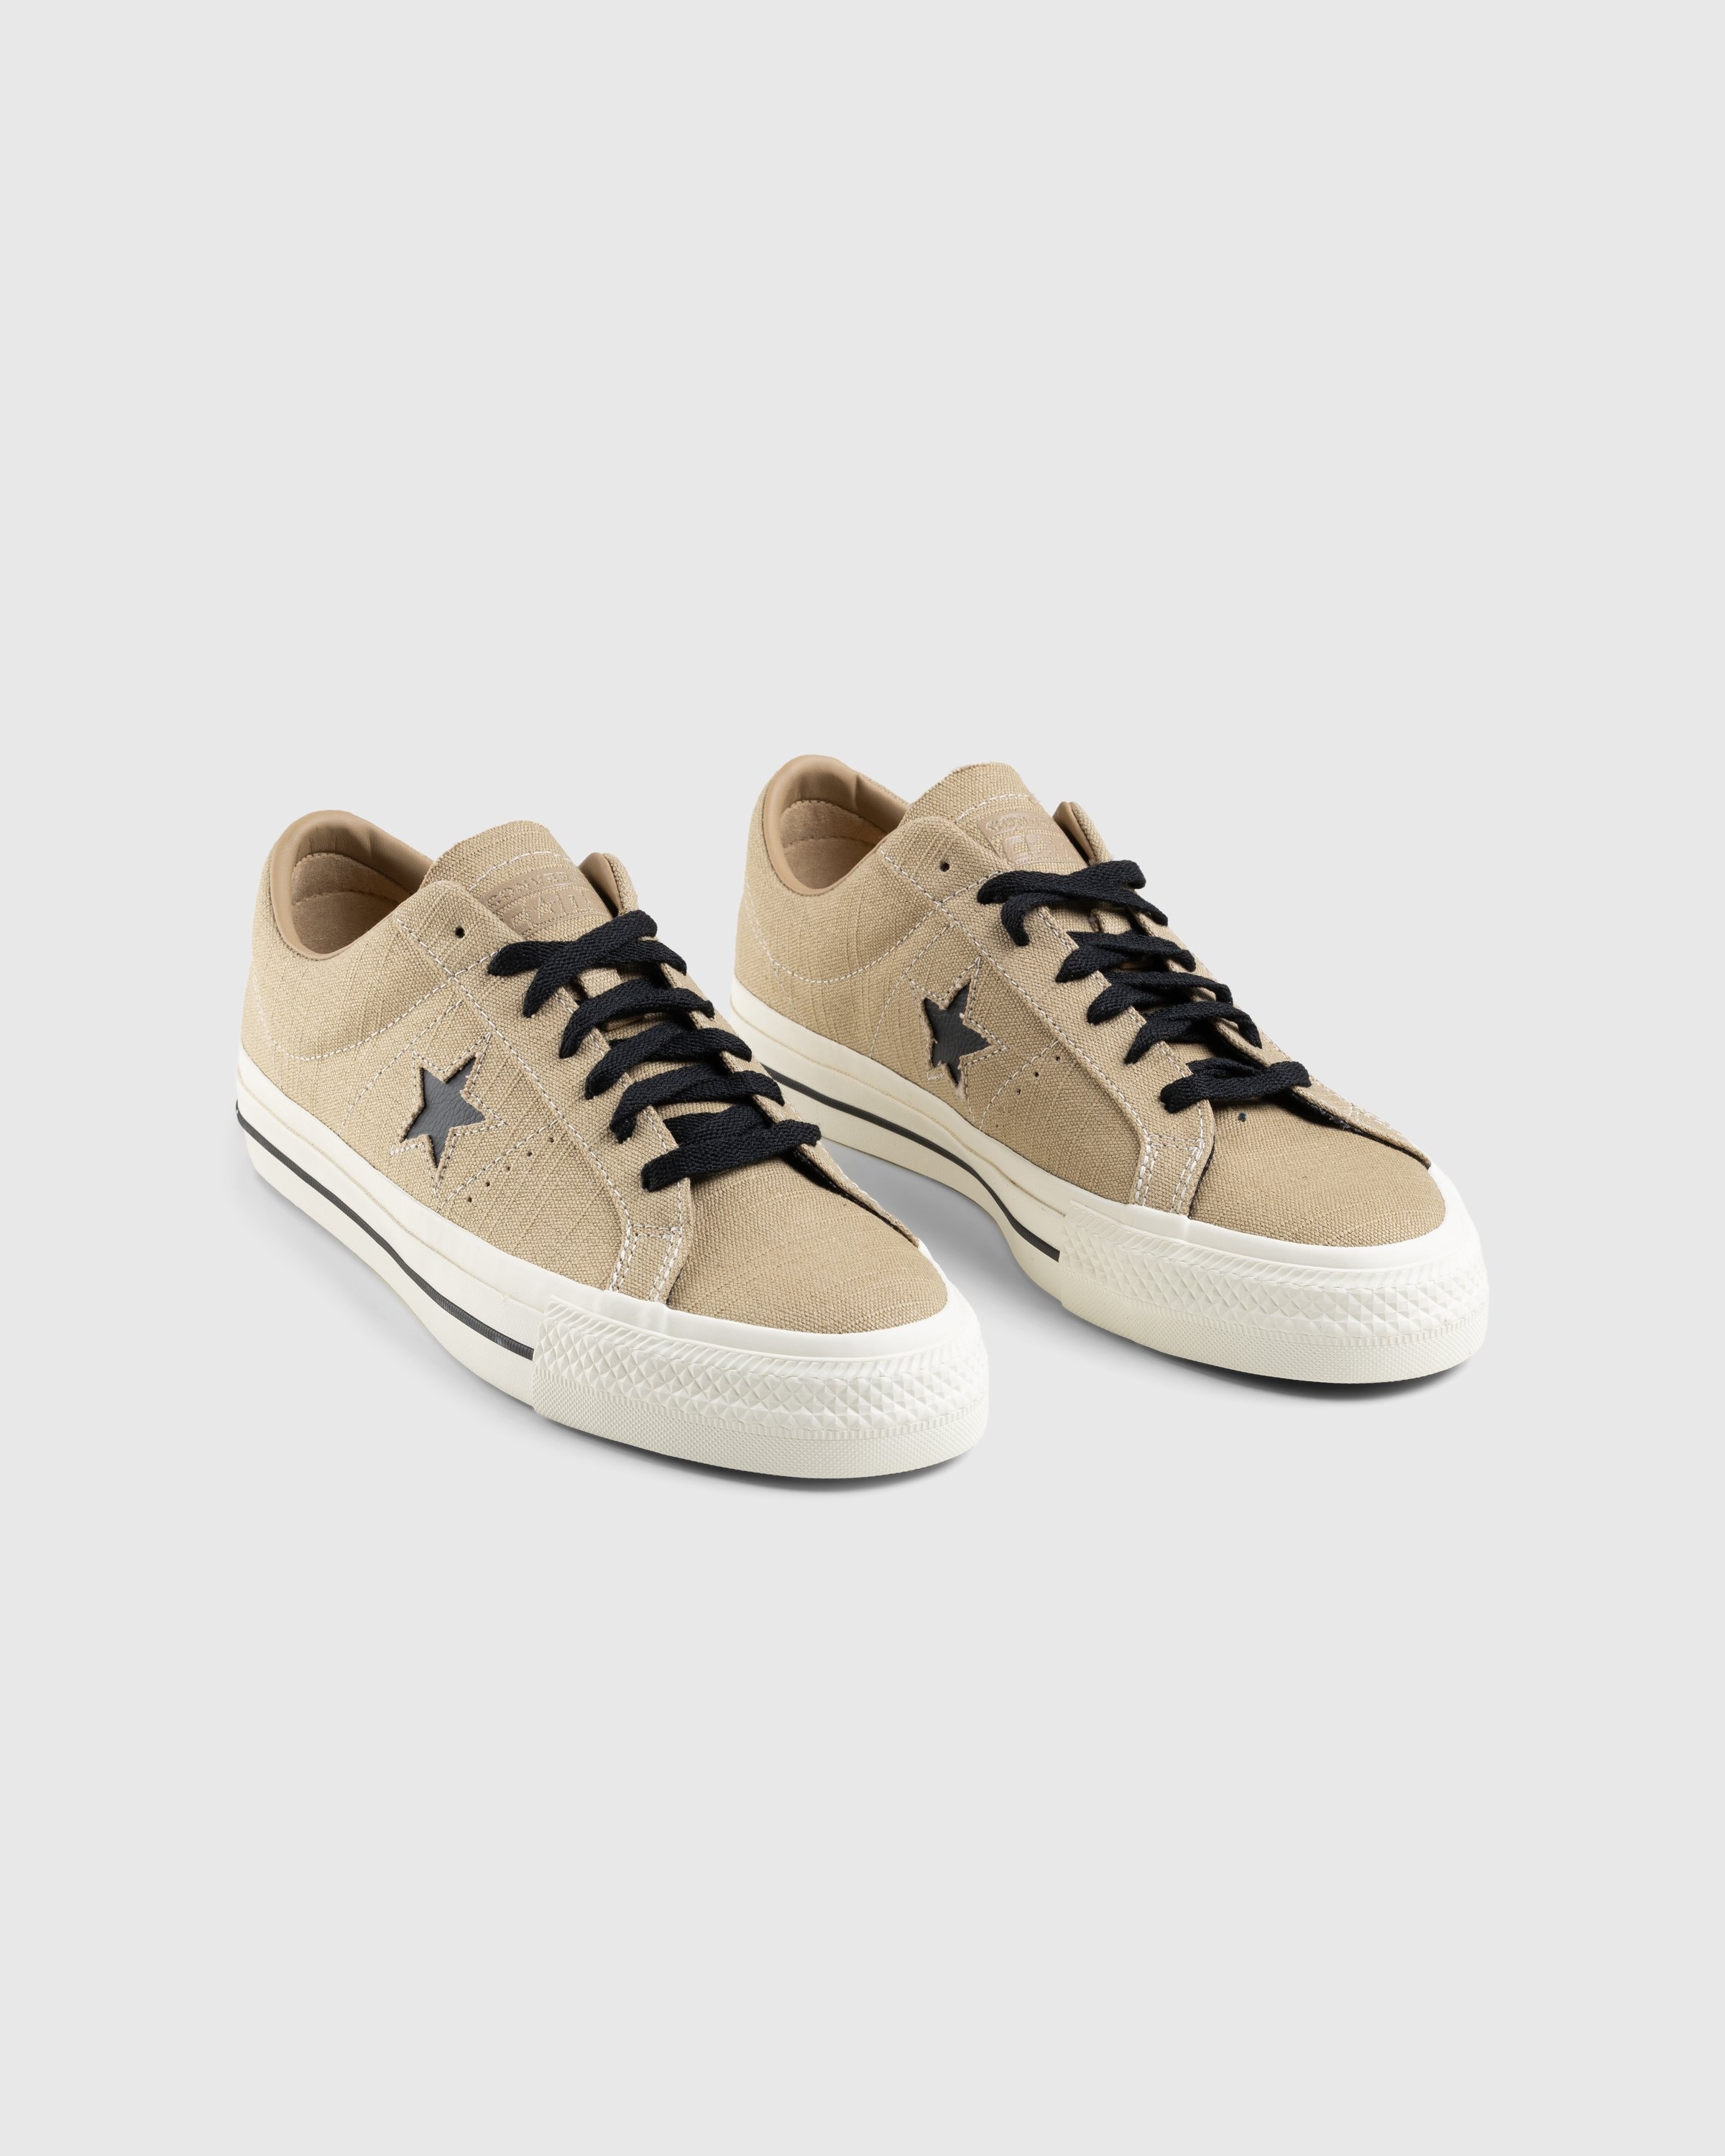 Converse – One Star Pro Ox Nomad Khaki/Egret/Black - Sneakers - Beige - Image 3